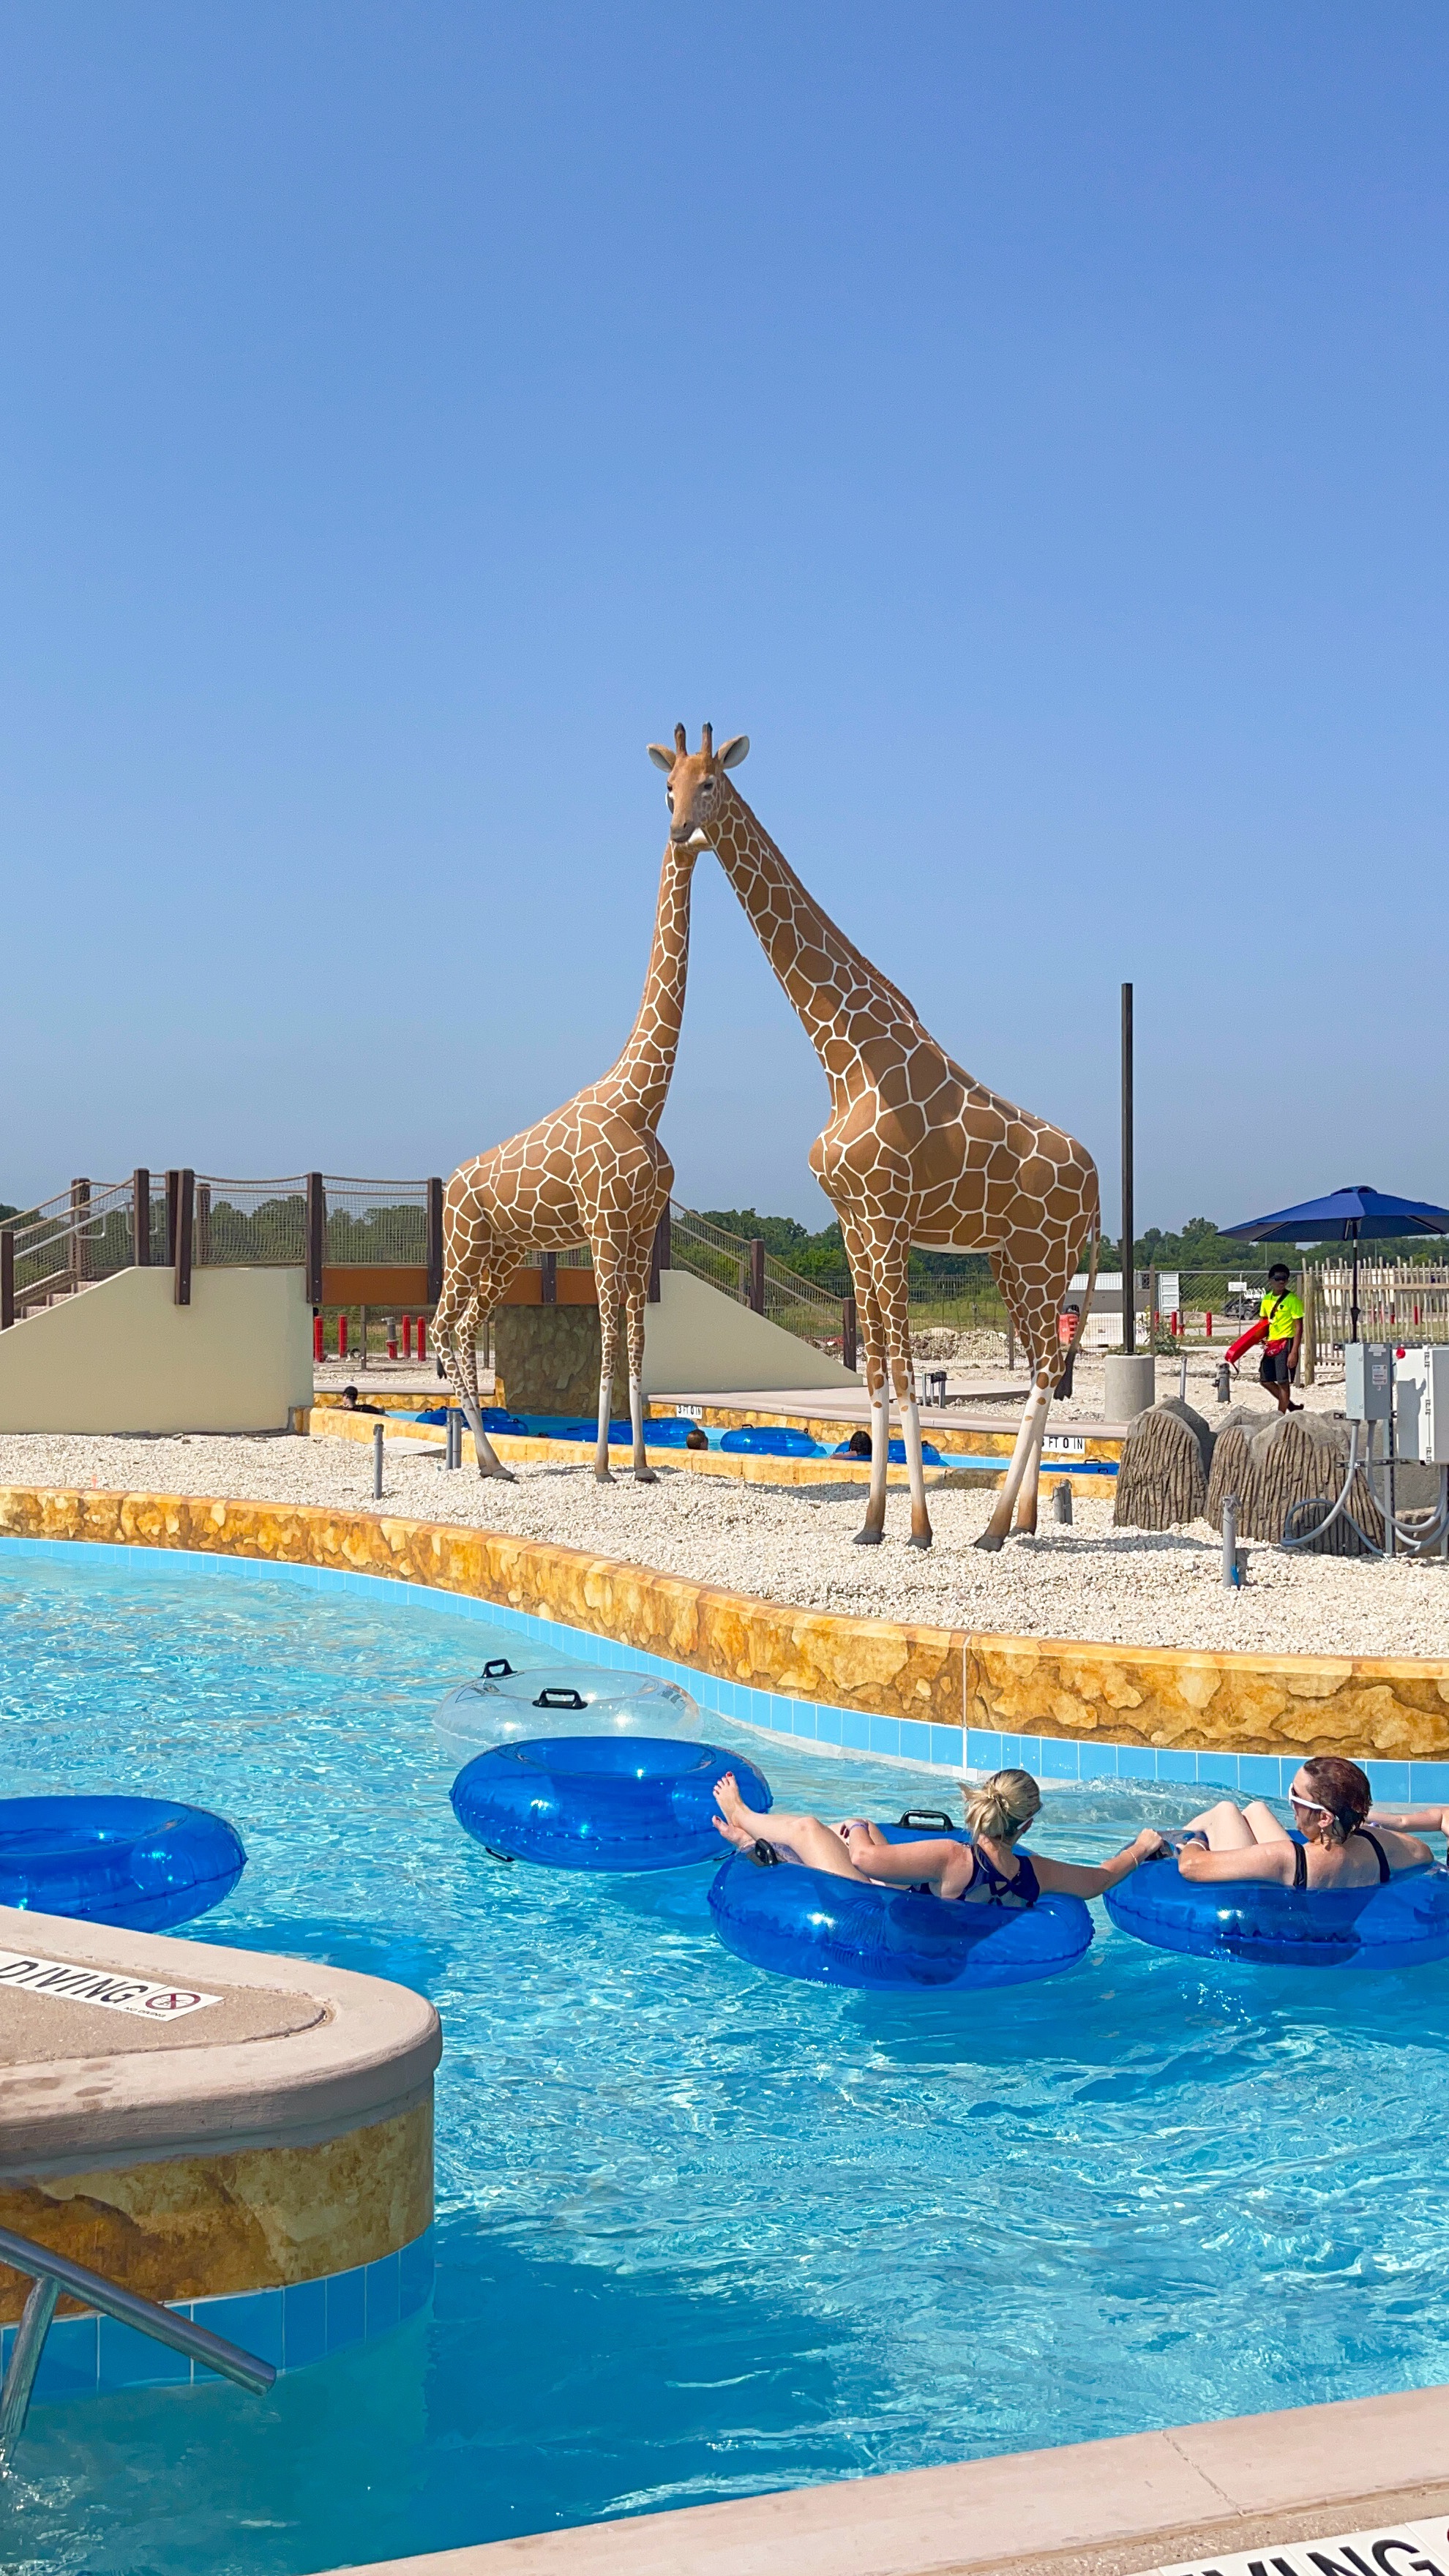 Kalahari Resorts Waterpark - New Expansion Round Rock